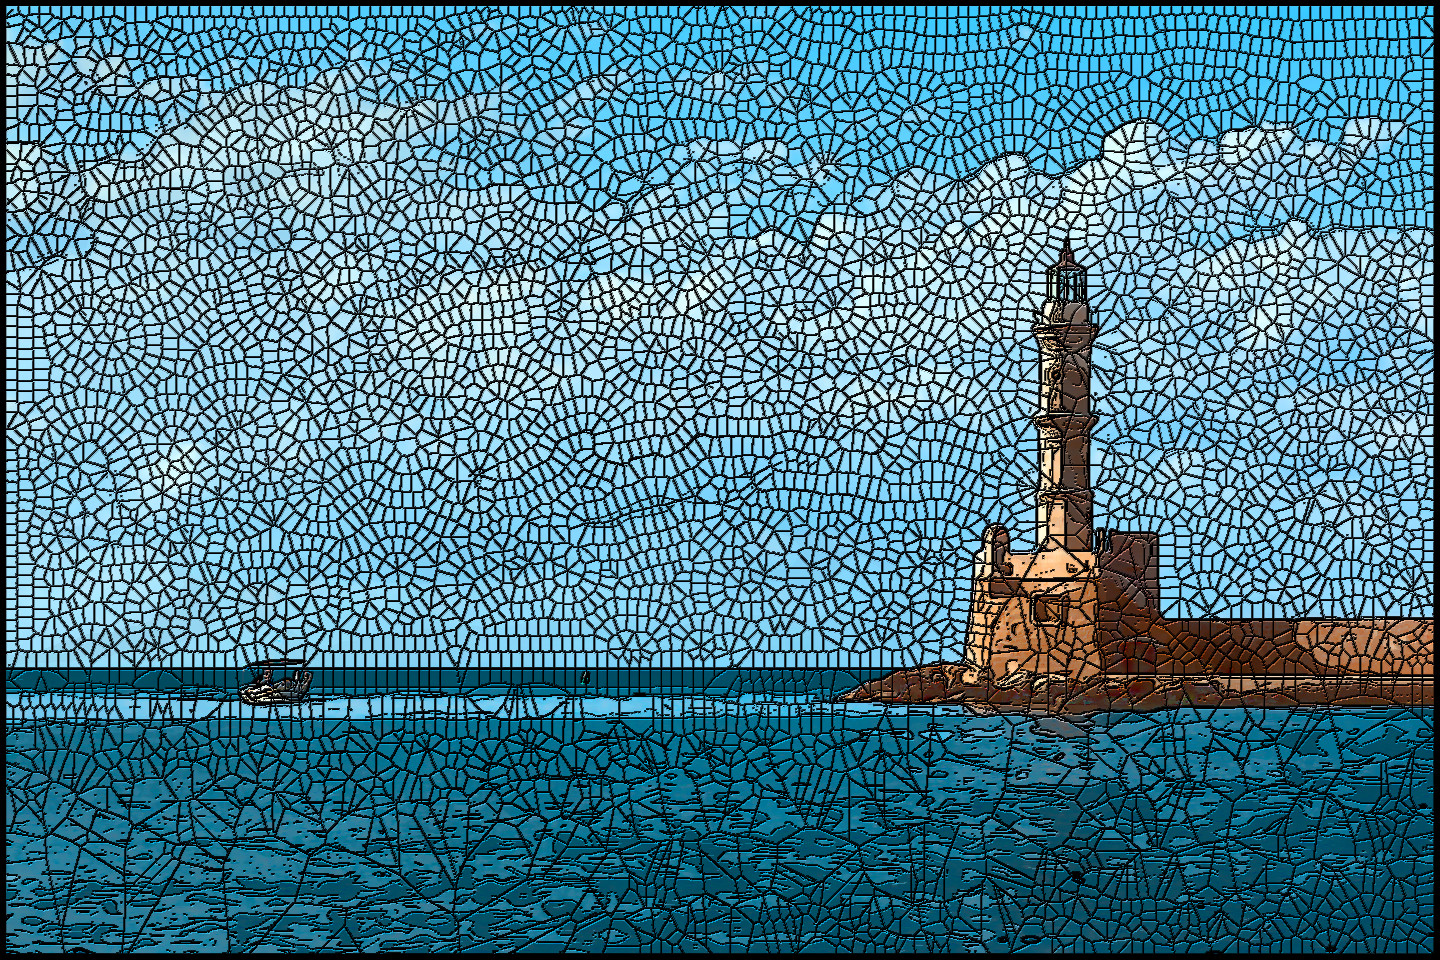 2023-09-20 09-43-41 lighthouse-2104591_1920, as a Roman Mosaic  (parms=64,1,1,3,1,4,1,0).jpg